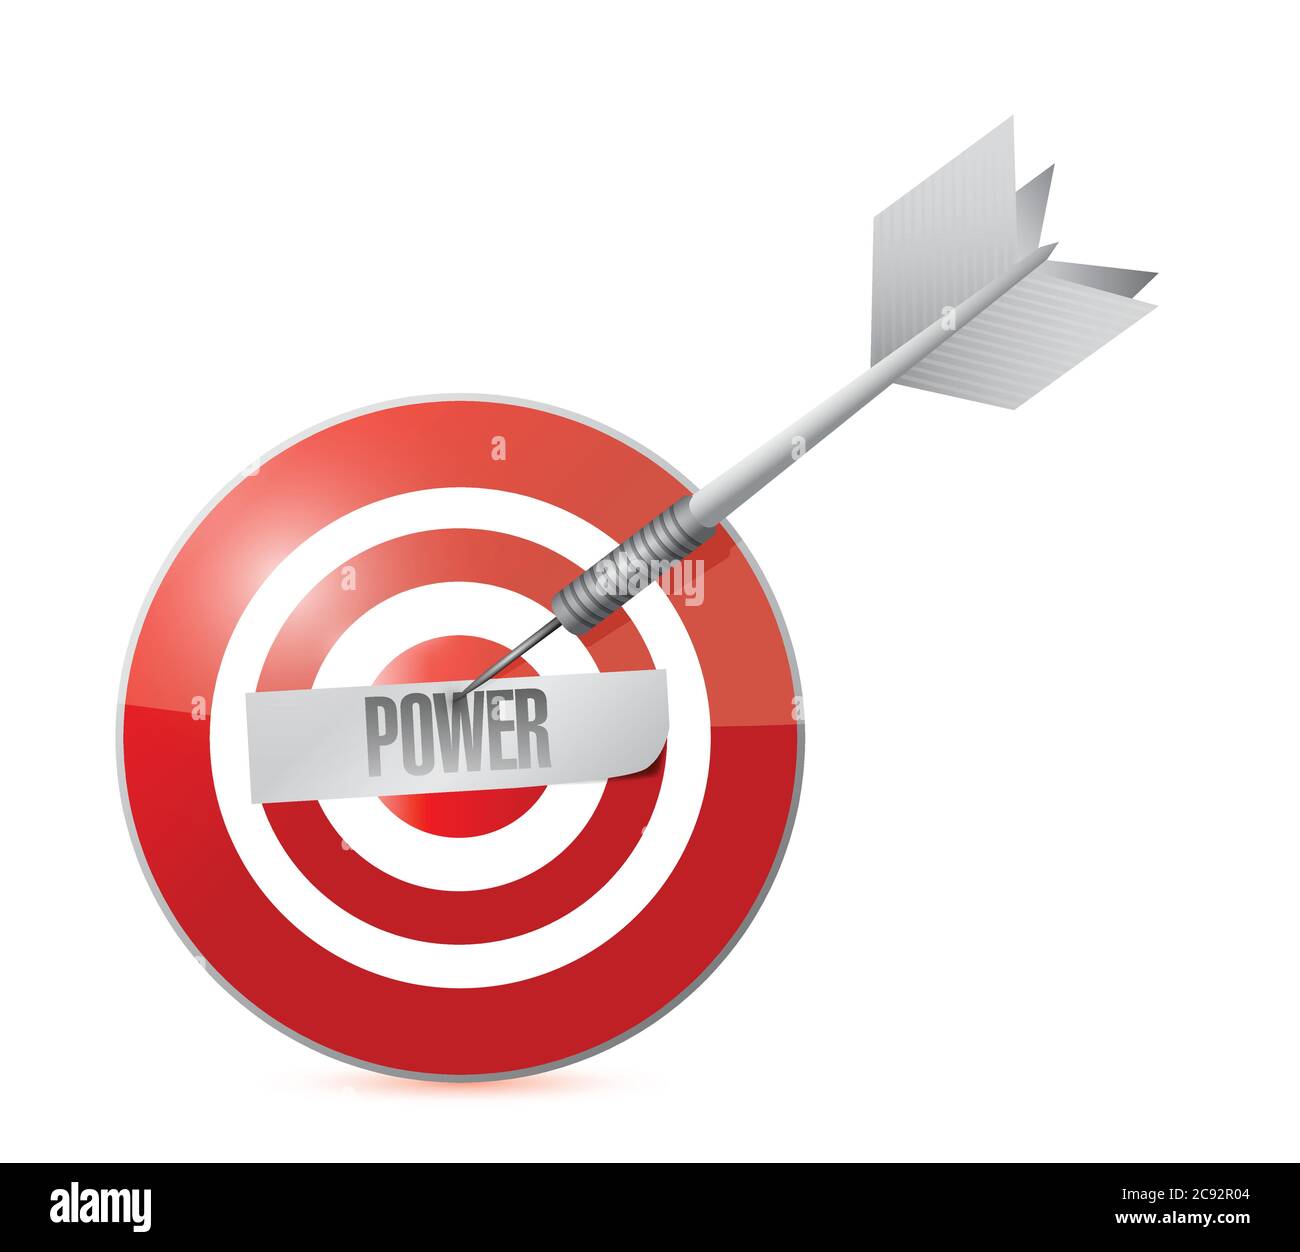 Target power. illustration design over a white background Stock Vector